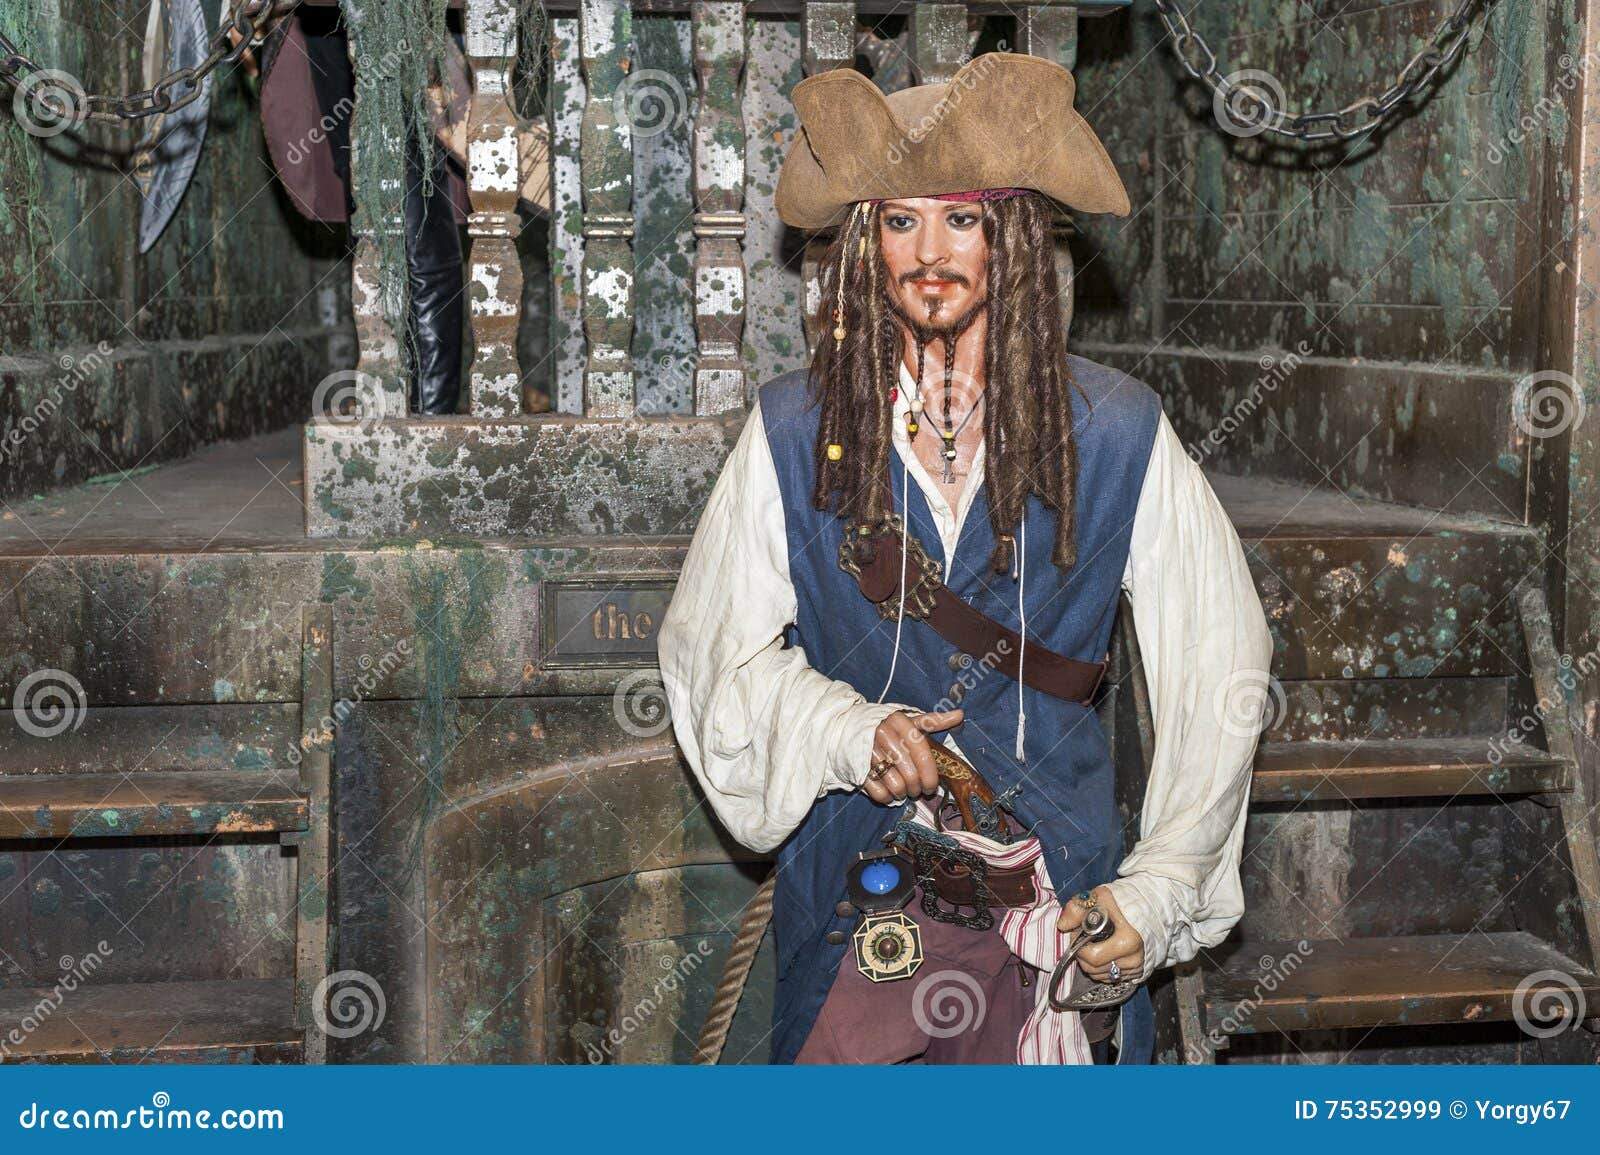 Jack Sparrow Redactionele Stock Afbeelding. Image Of Hollywood - 75352999